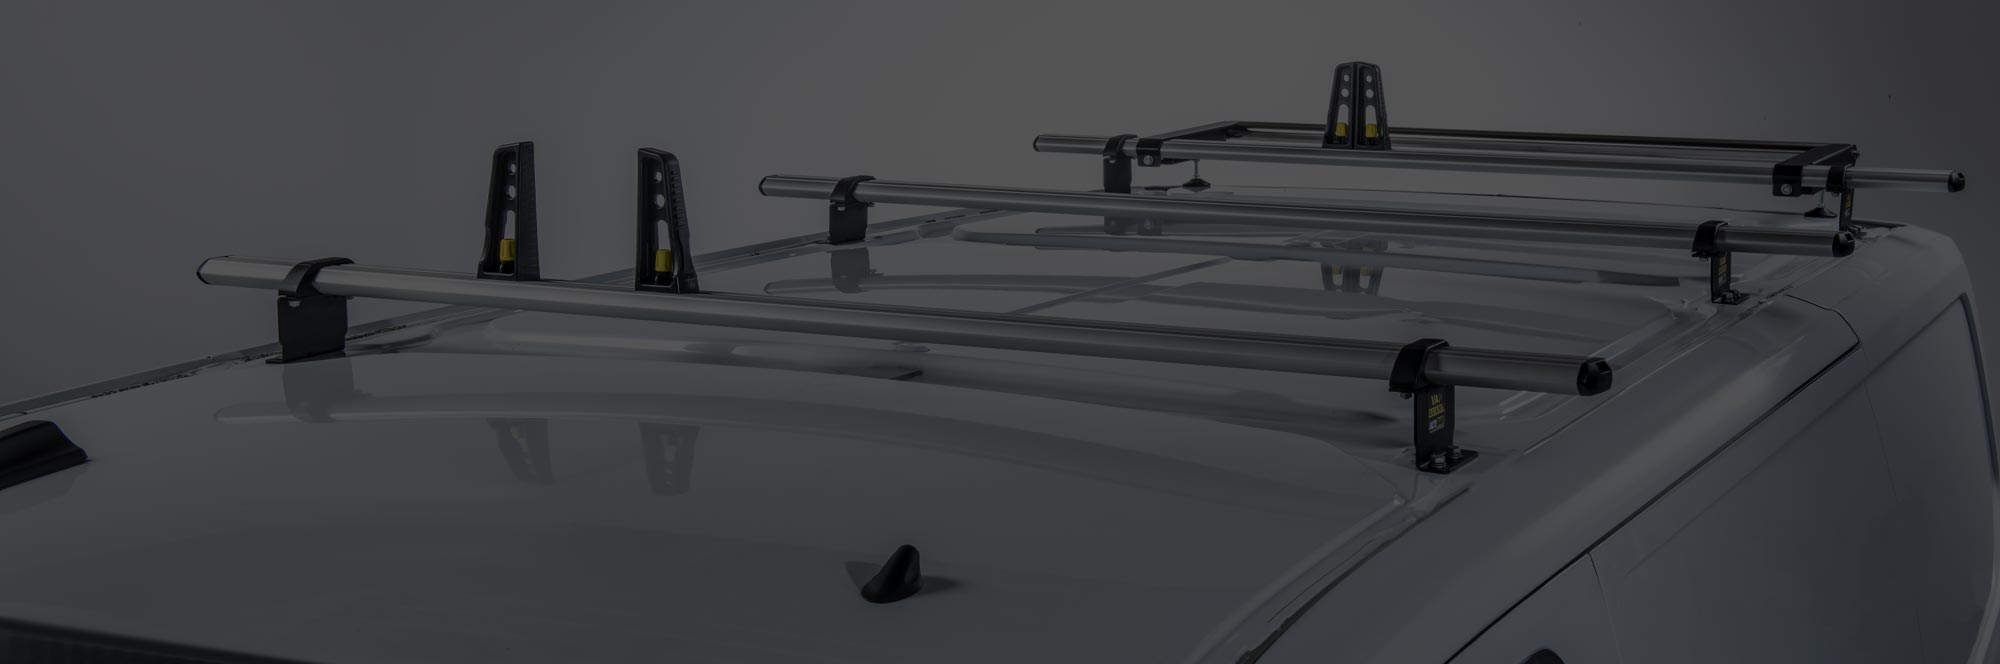 Roof Rack 4 Bars with Roller Kit Renault Traffic Van Current Model 2014-onward